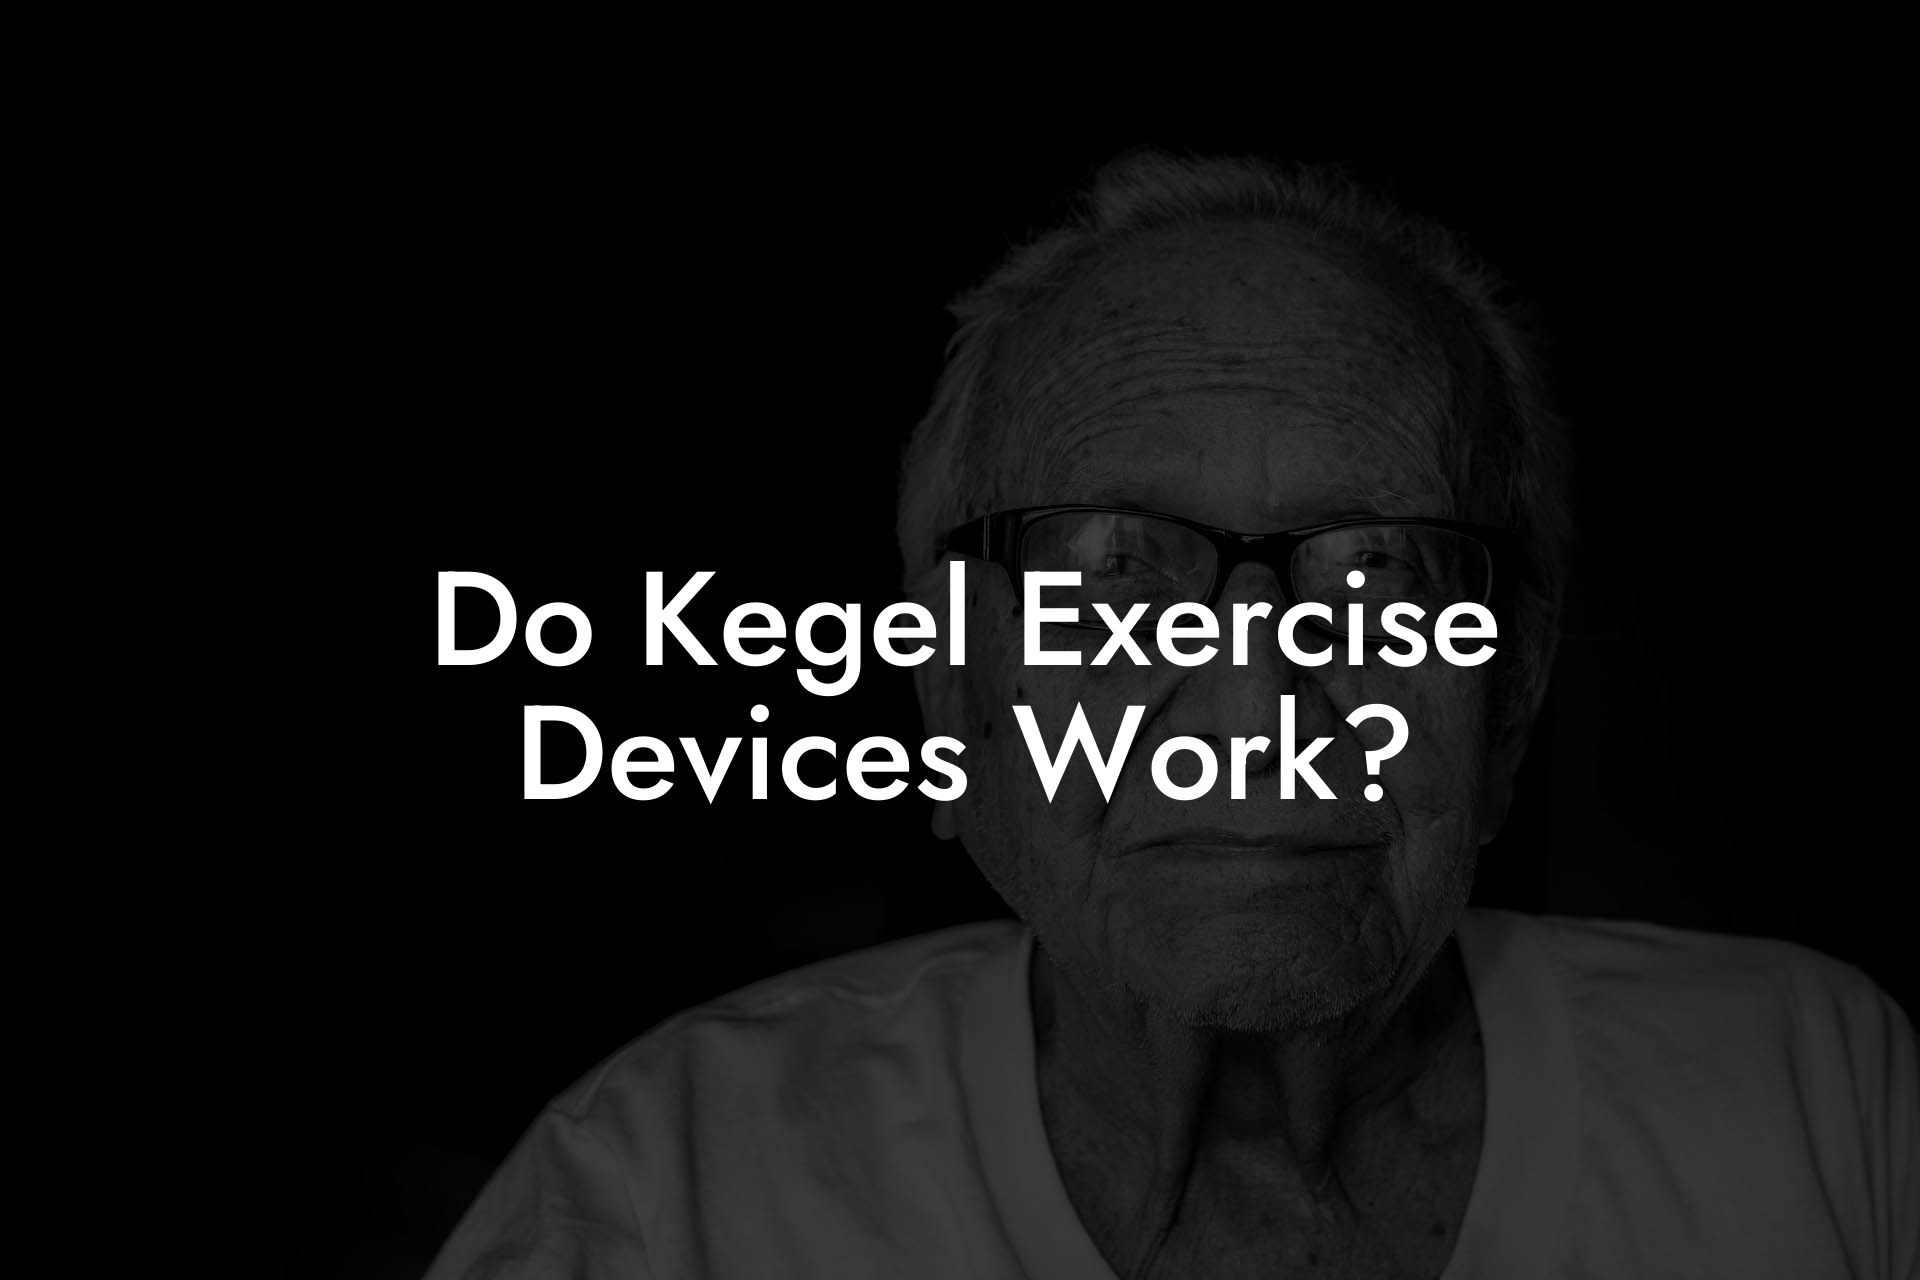 Do Kegel Exercise Devices Work?